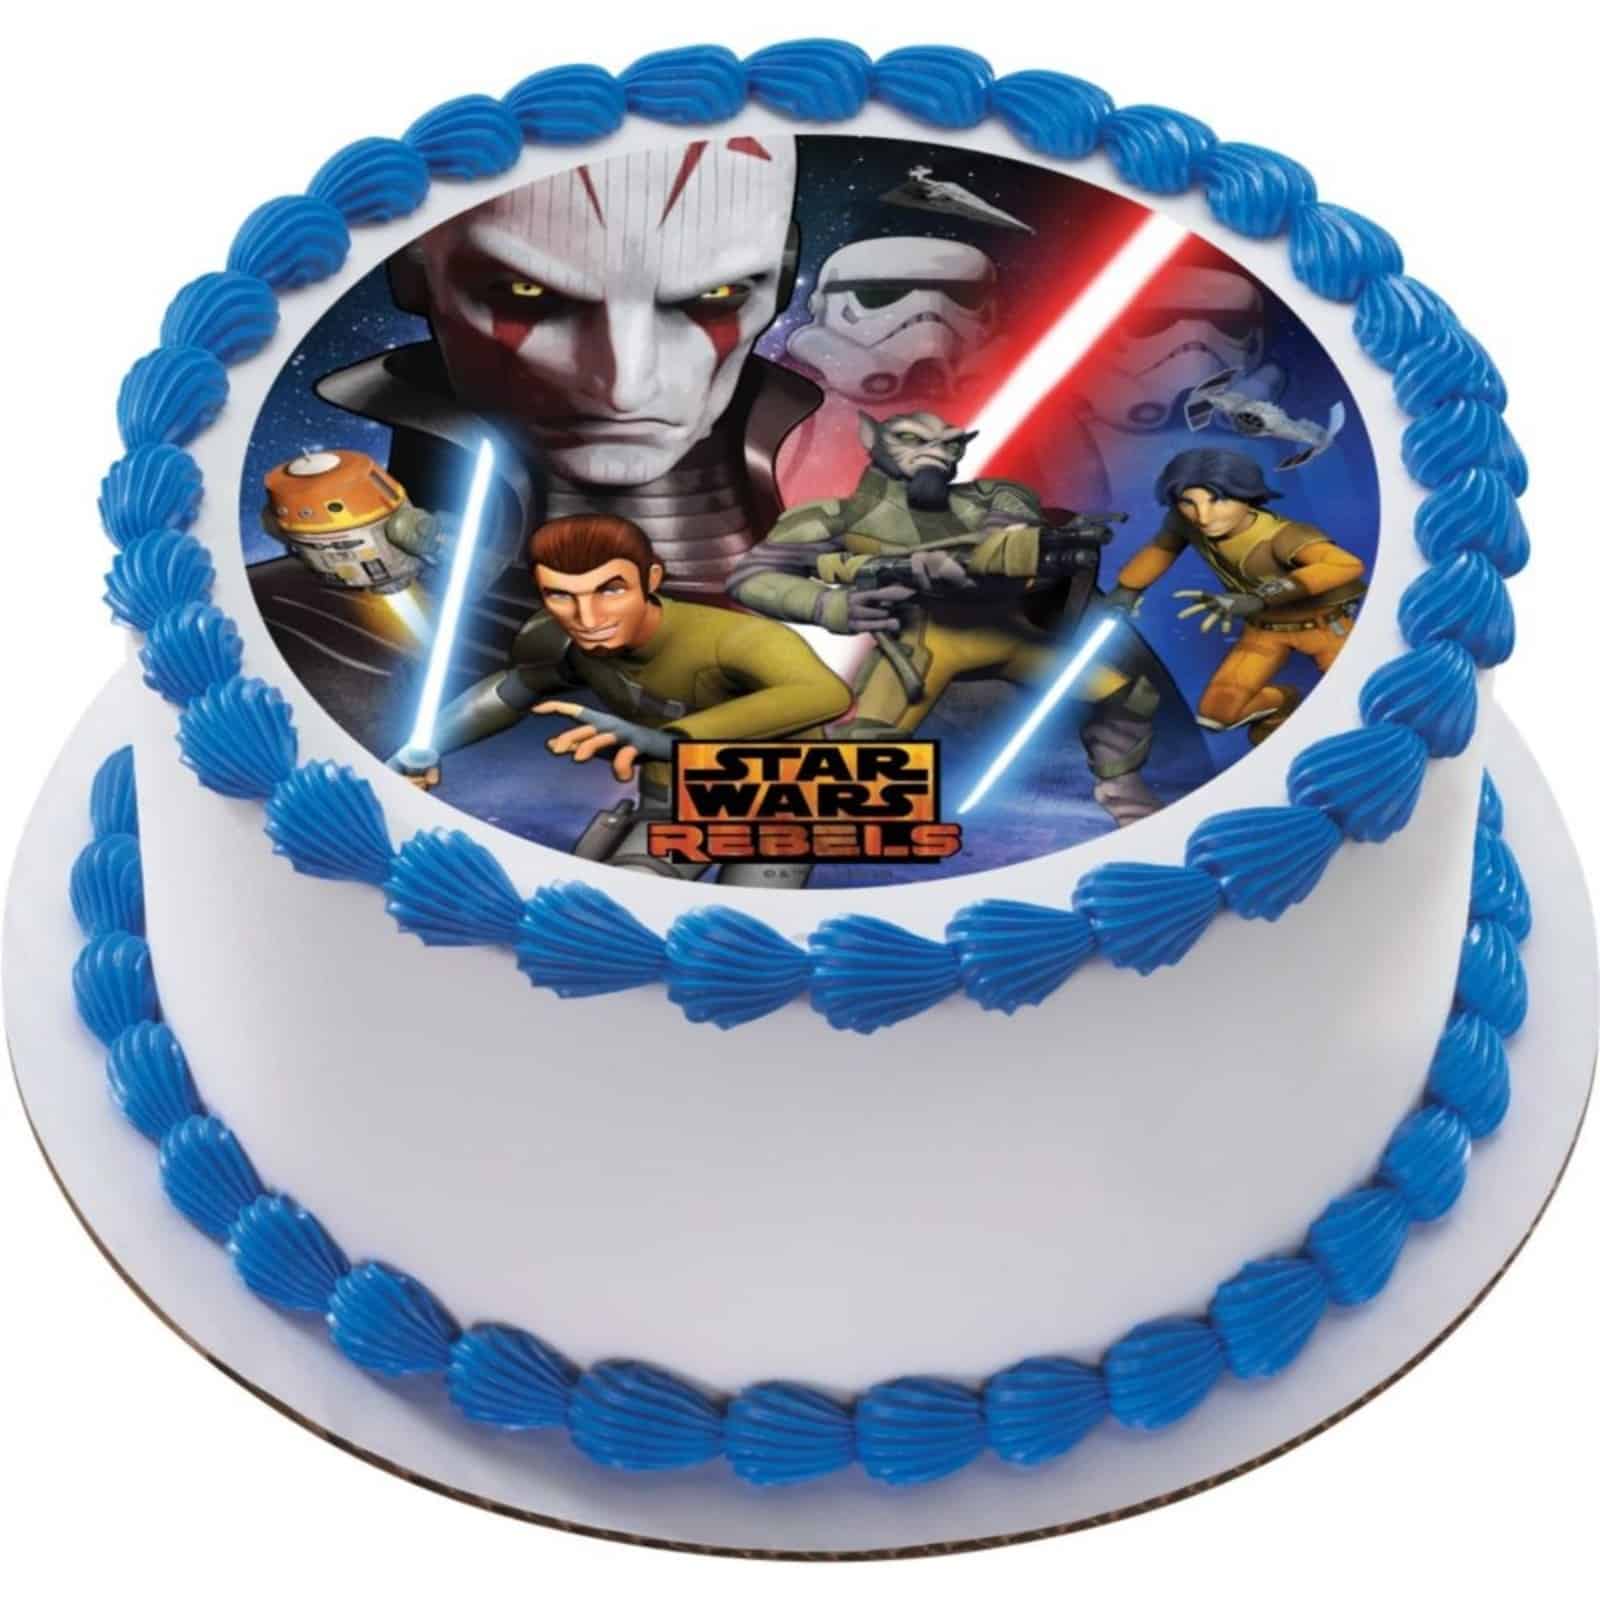 Star Wars Rebels 7.5"  Round Edible Cake Topper (Each)